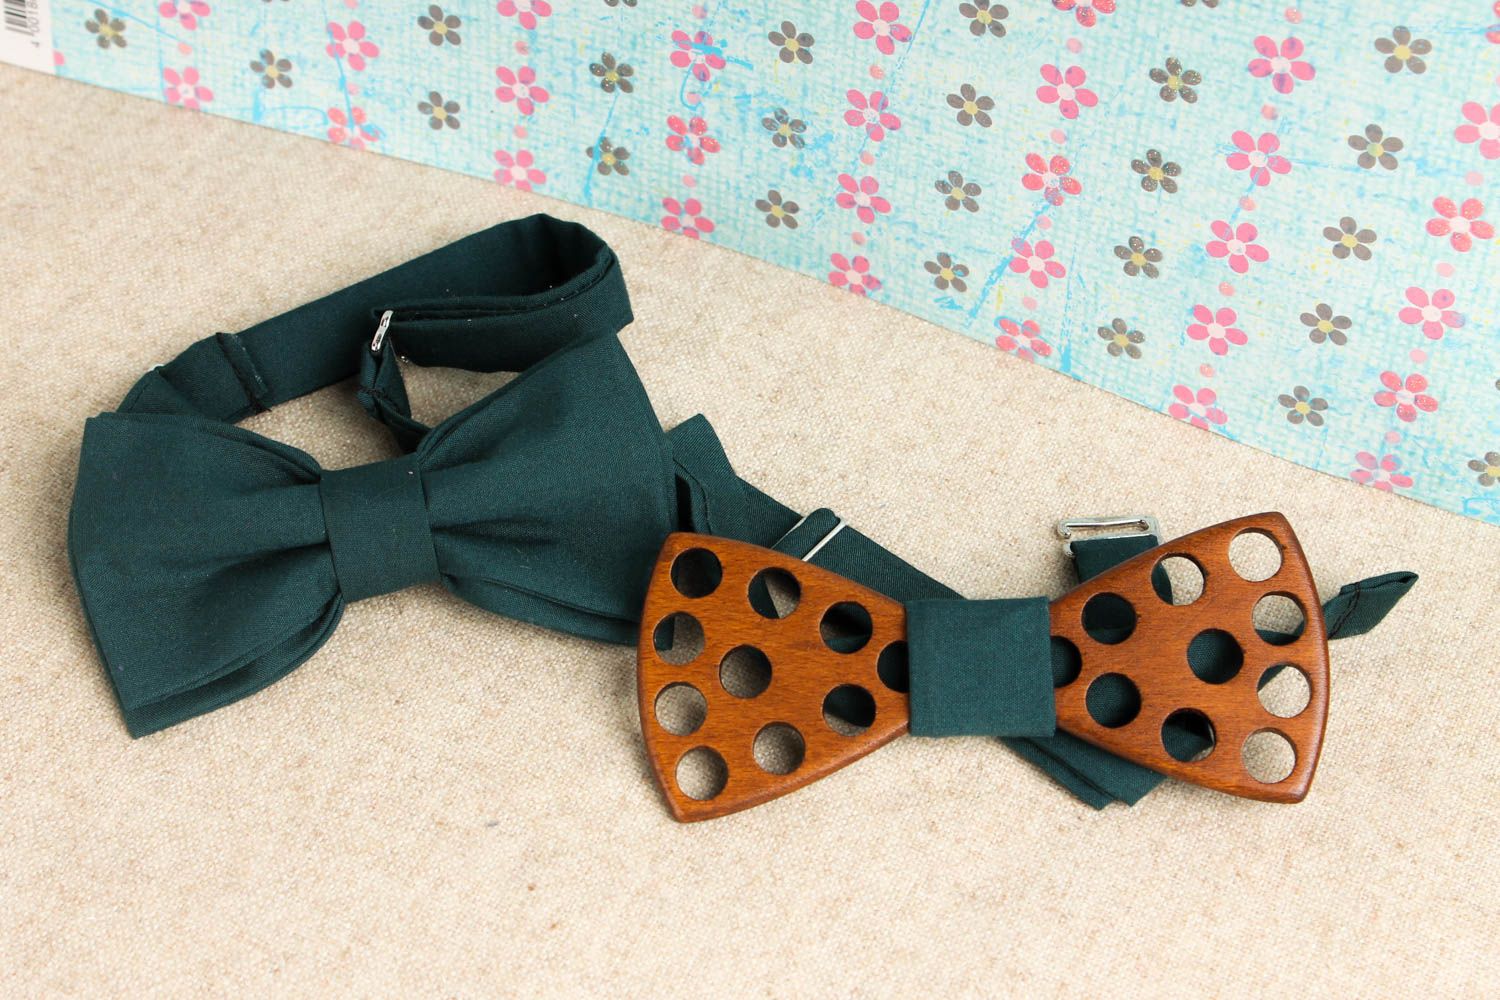 Handmade beautiful wooden bow tie 2 designer bow ties accessories for men photo 1